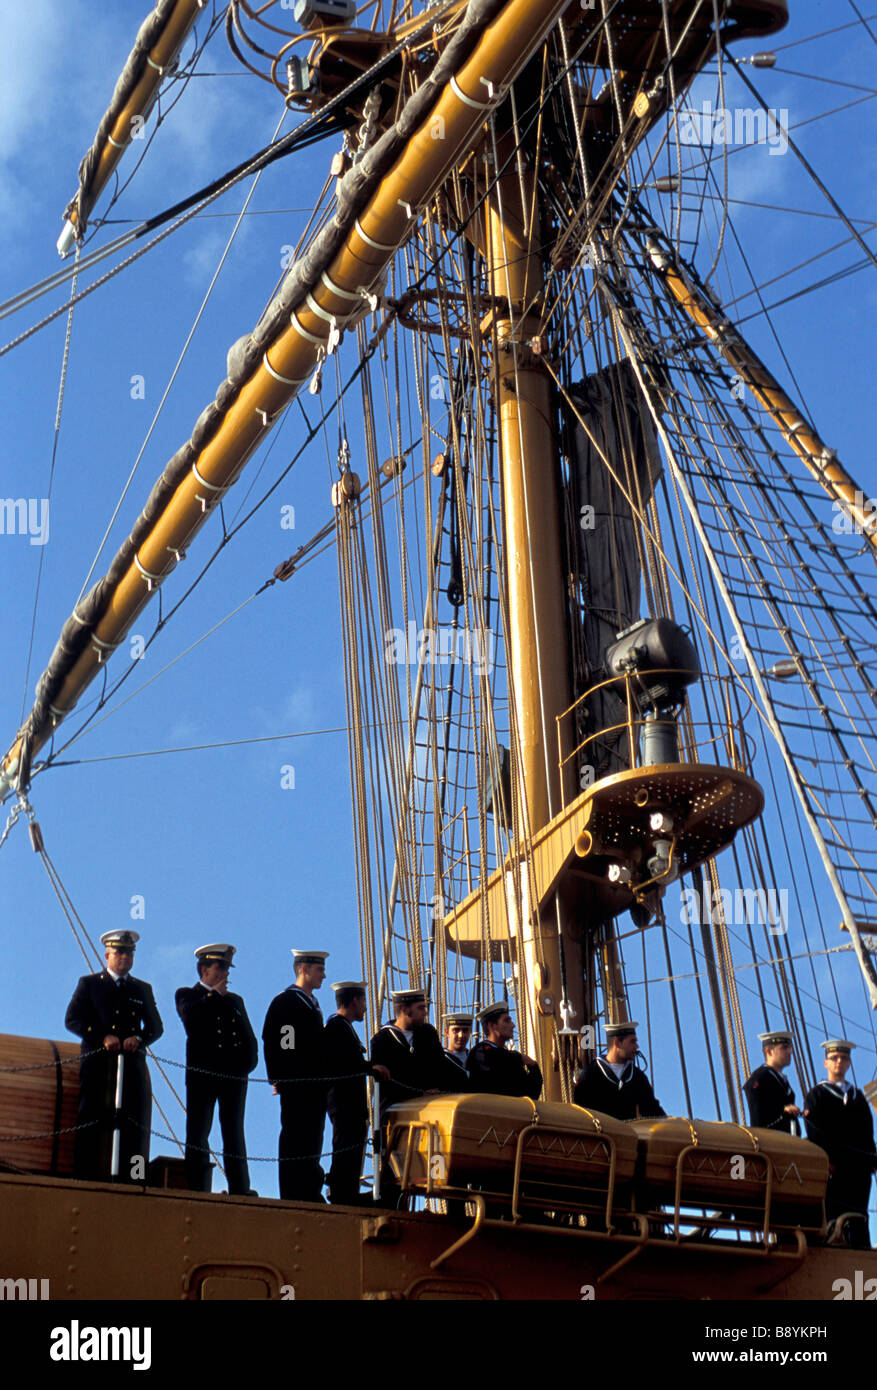 Sailors on main deck, Amerigo Vespucci tall ship Stock Photo